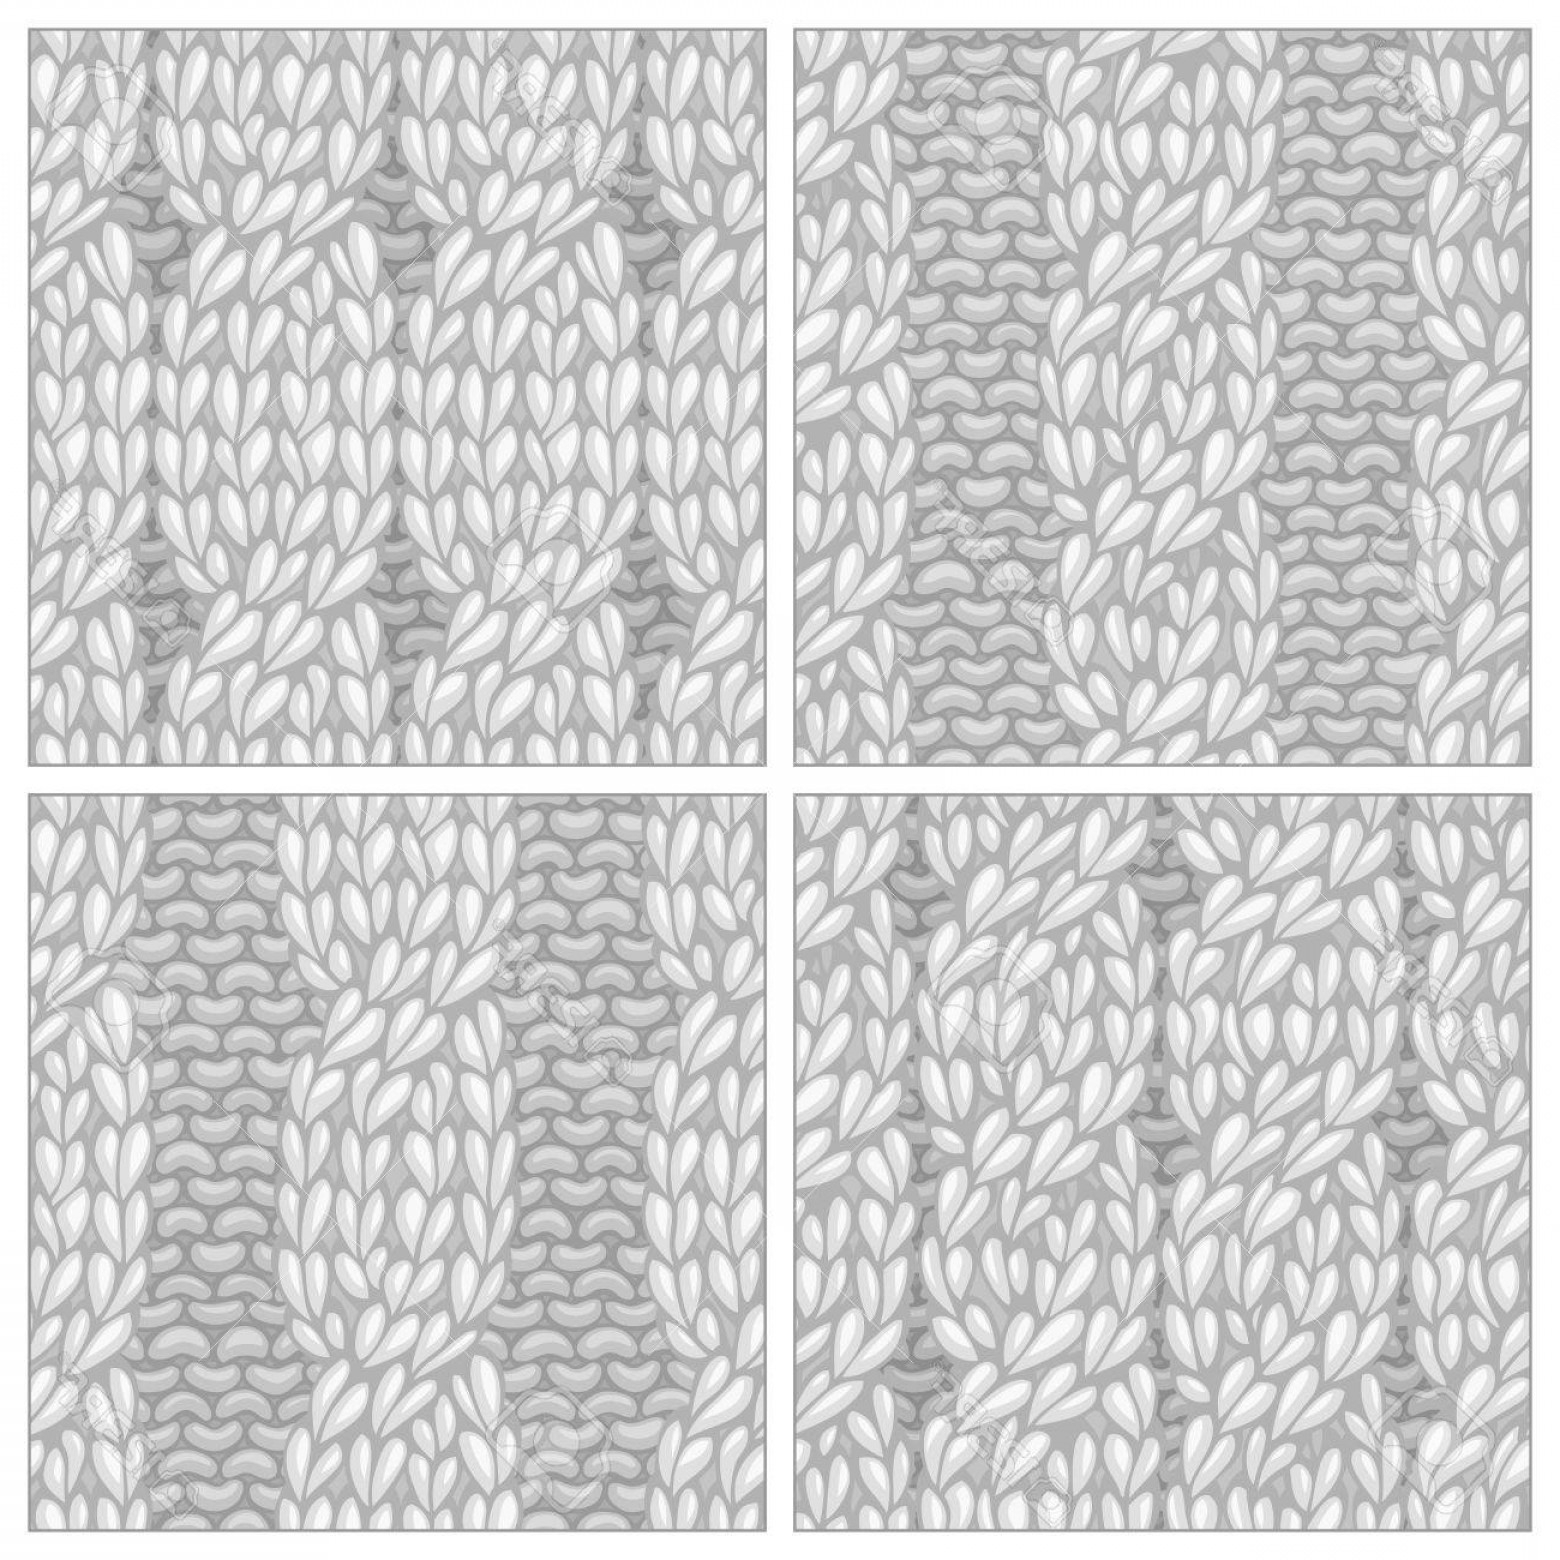 Seamless Knitting Patterns Photostock Vector Seamless Knitting Pattern Twisting To The Left